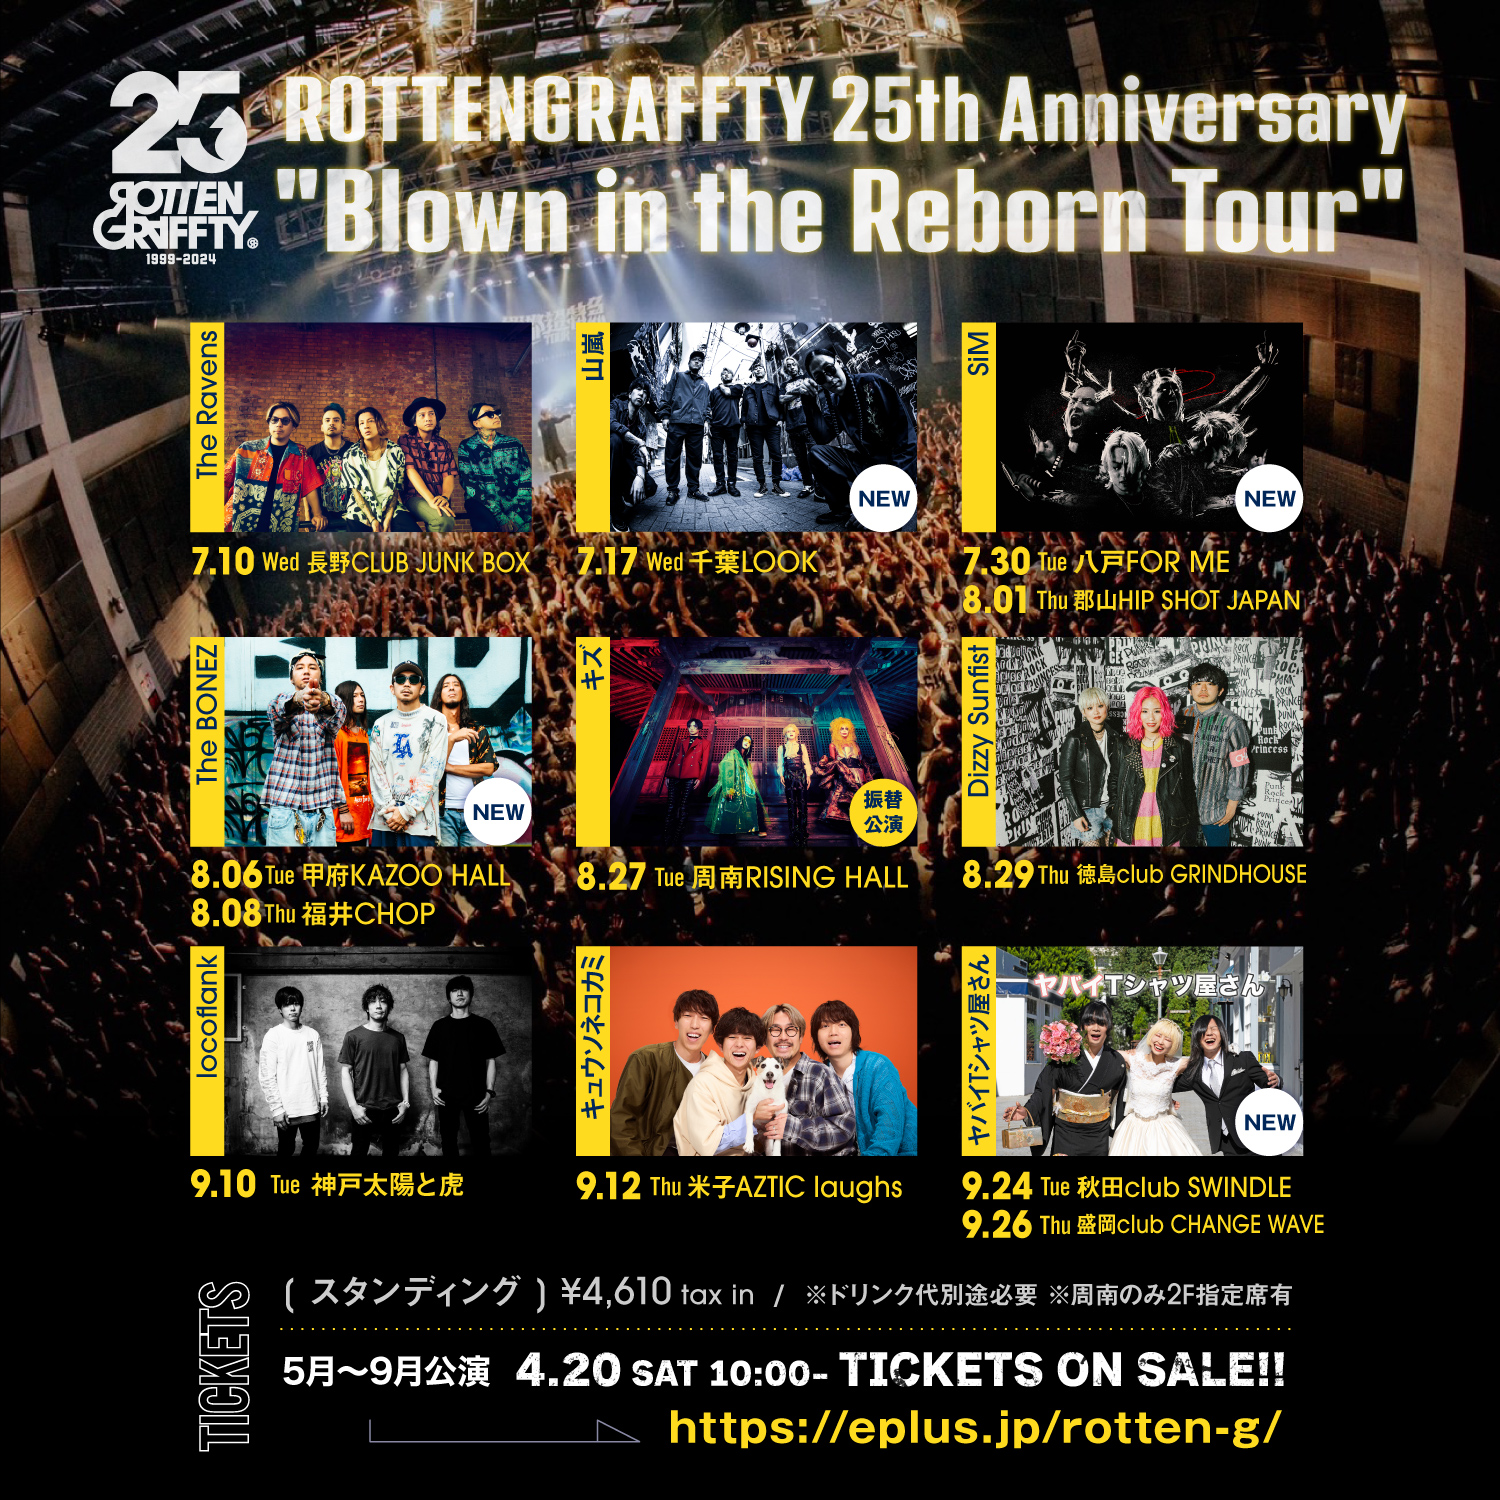 ROTTENGRAFFTY 25th Anniversary "Blown in the Reborn Tour"